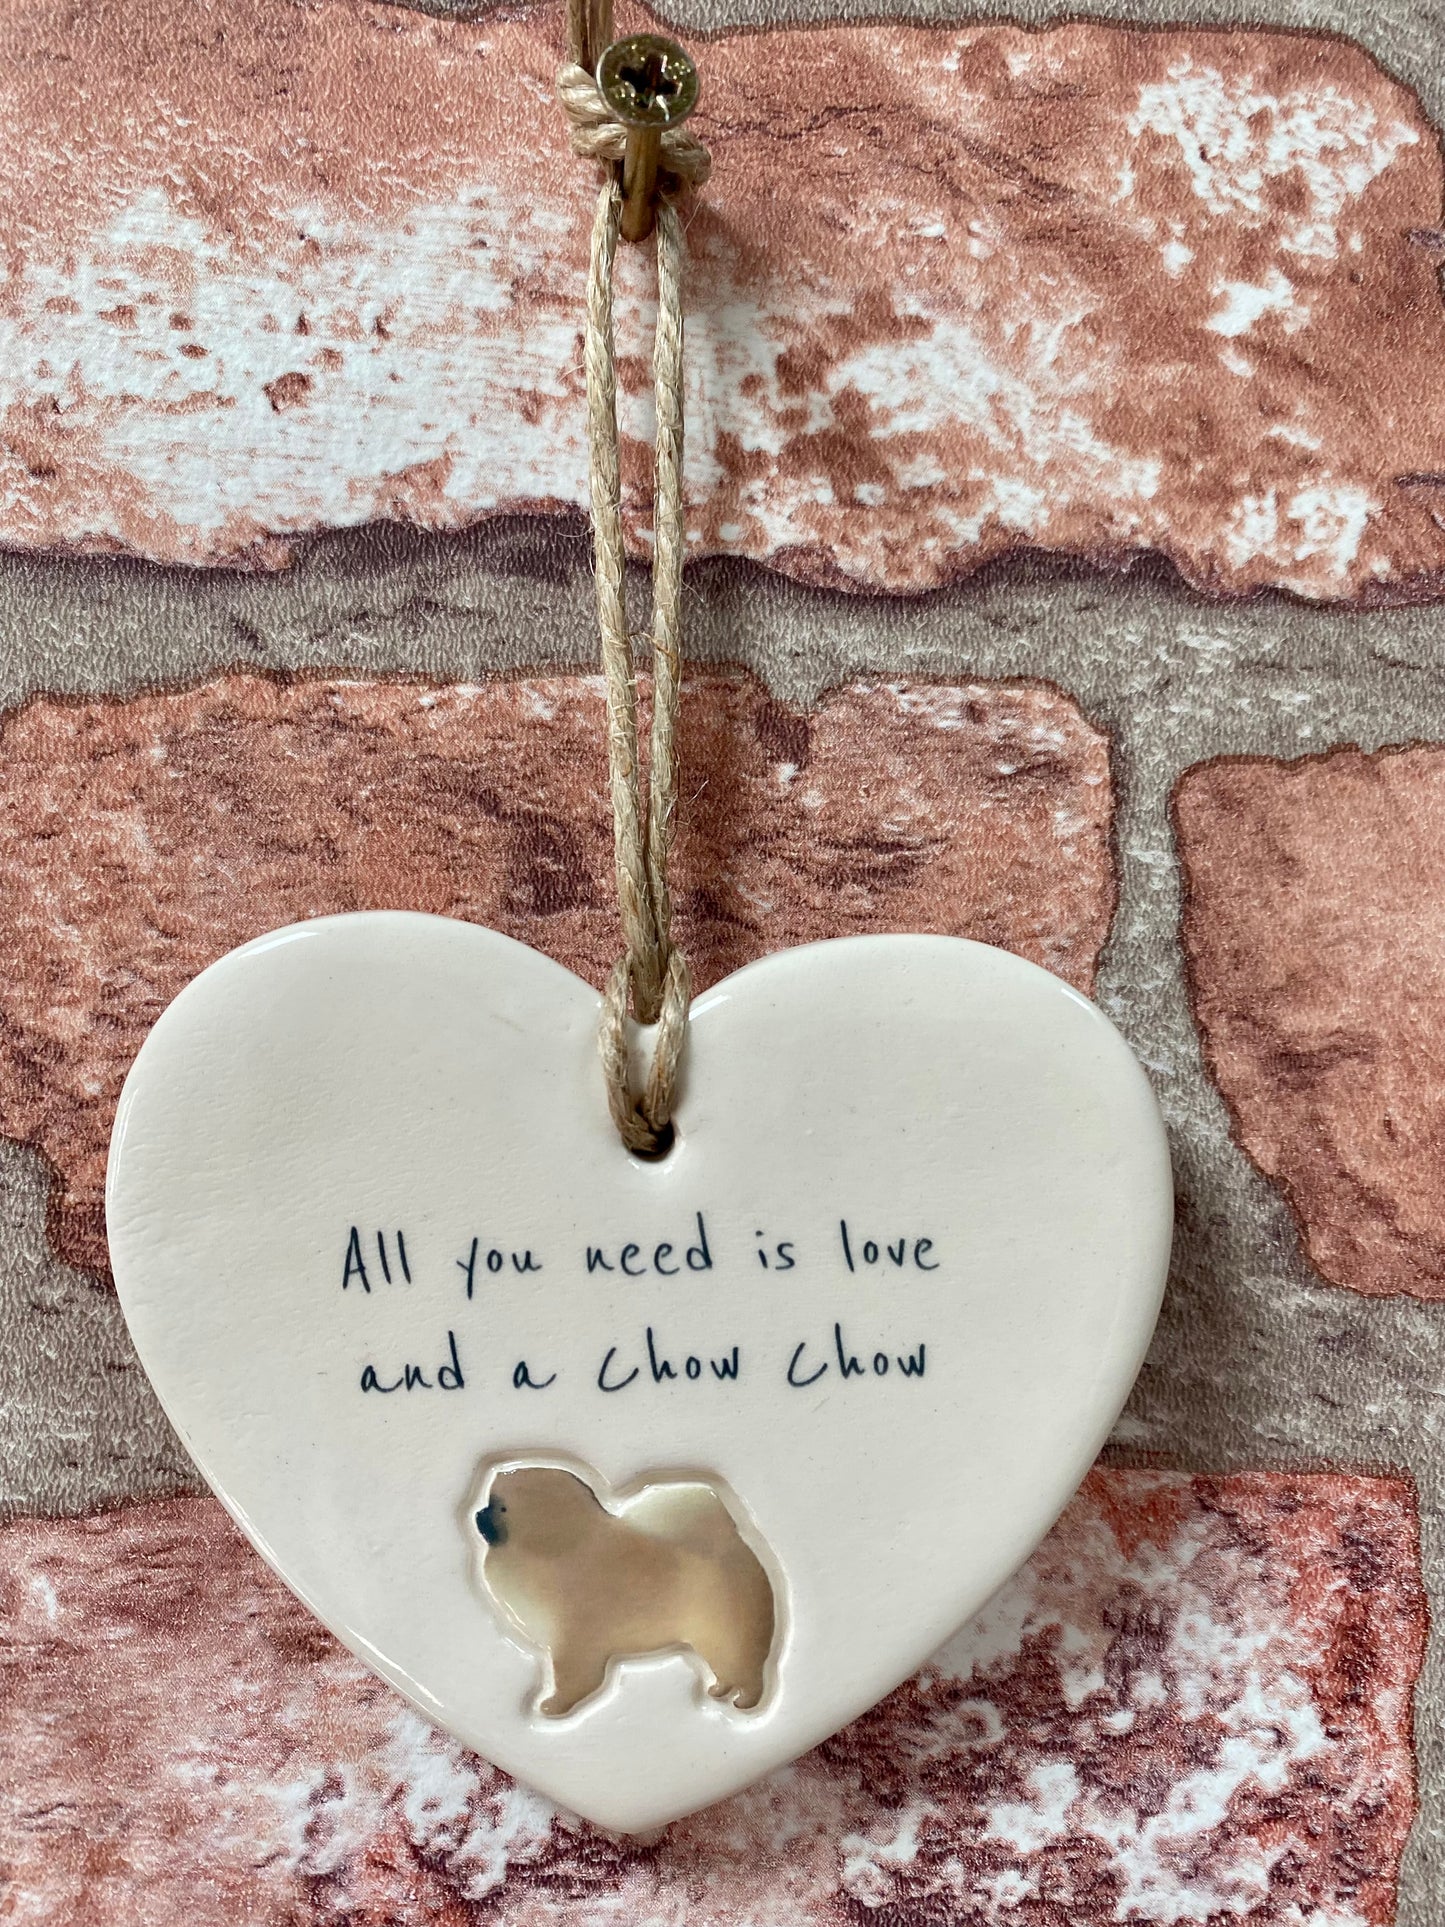 Chow Chow ceramic heart